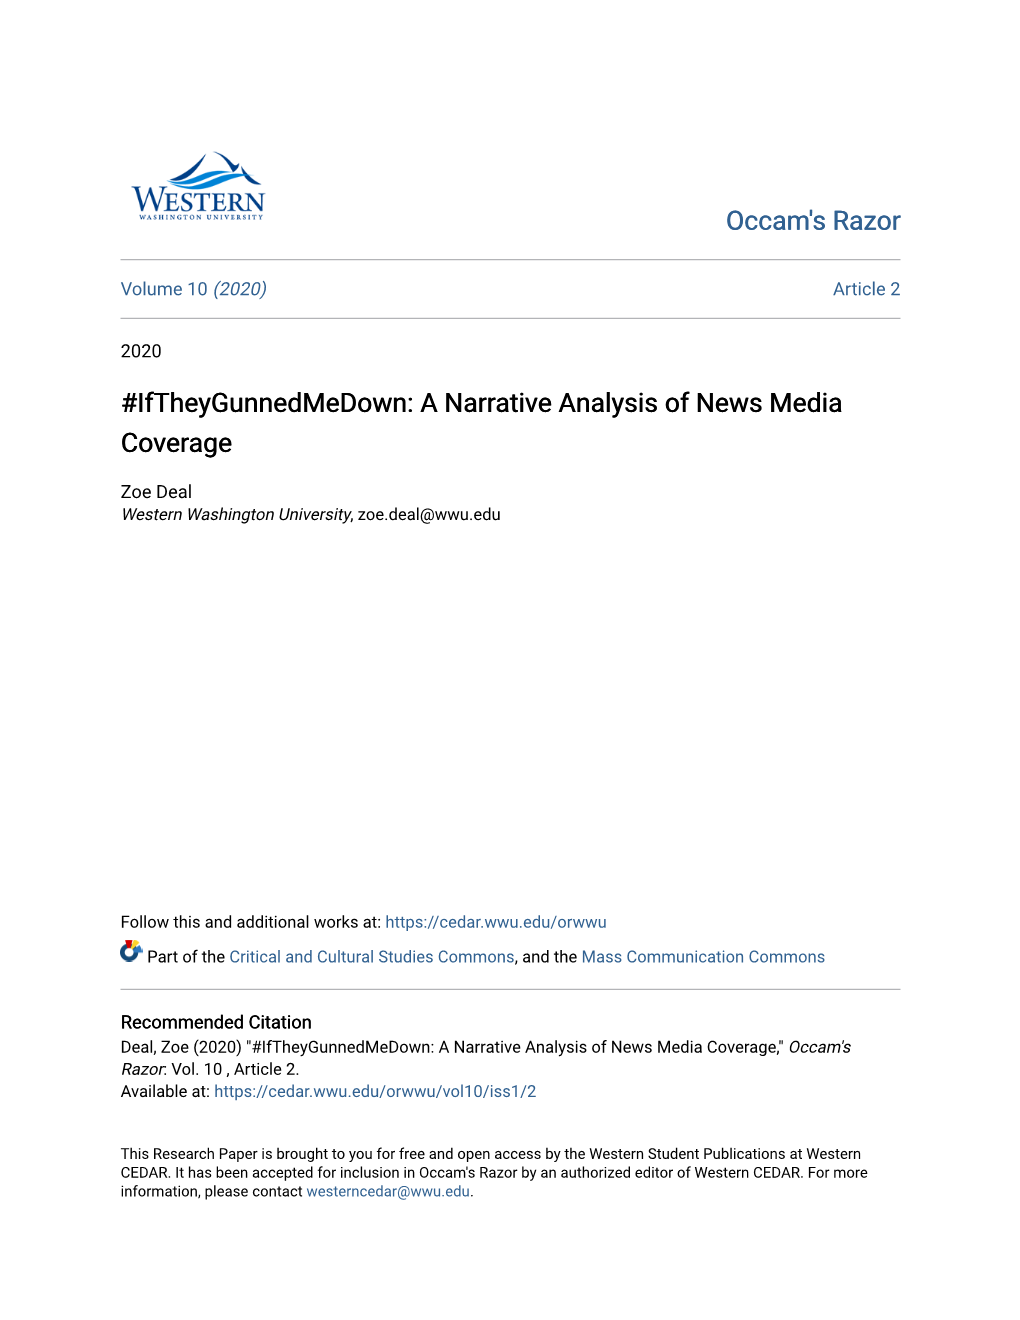 Iftheygunnedmedown: a Narrative Analysis of News Media Coverage